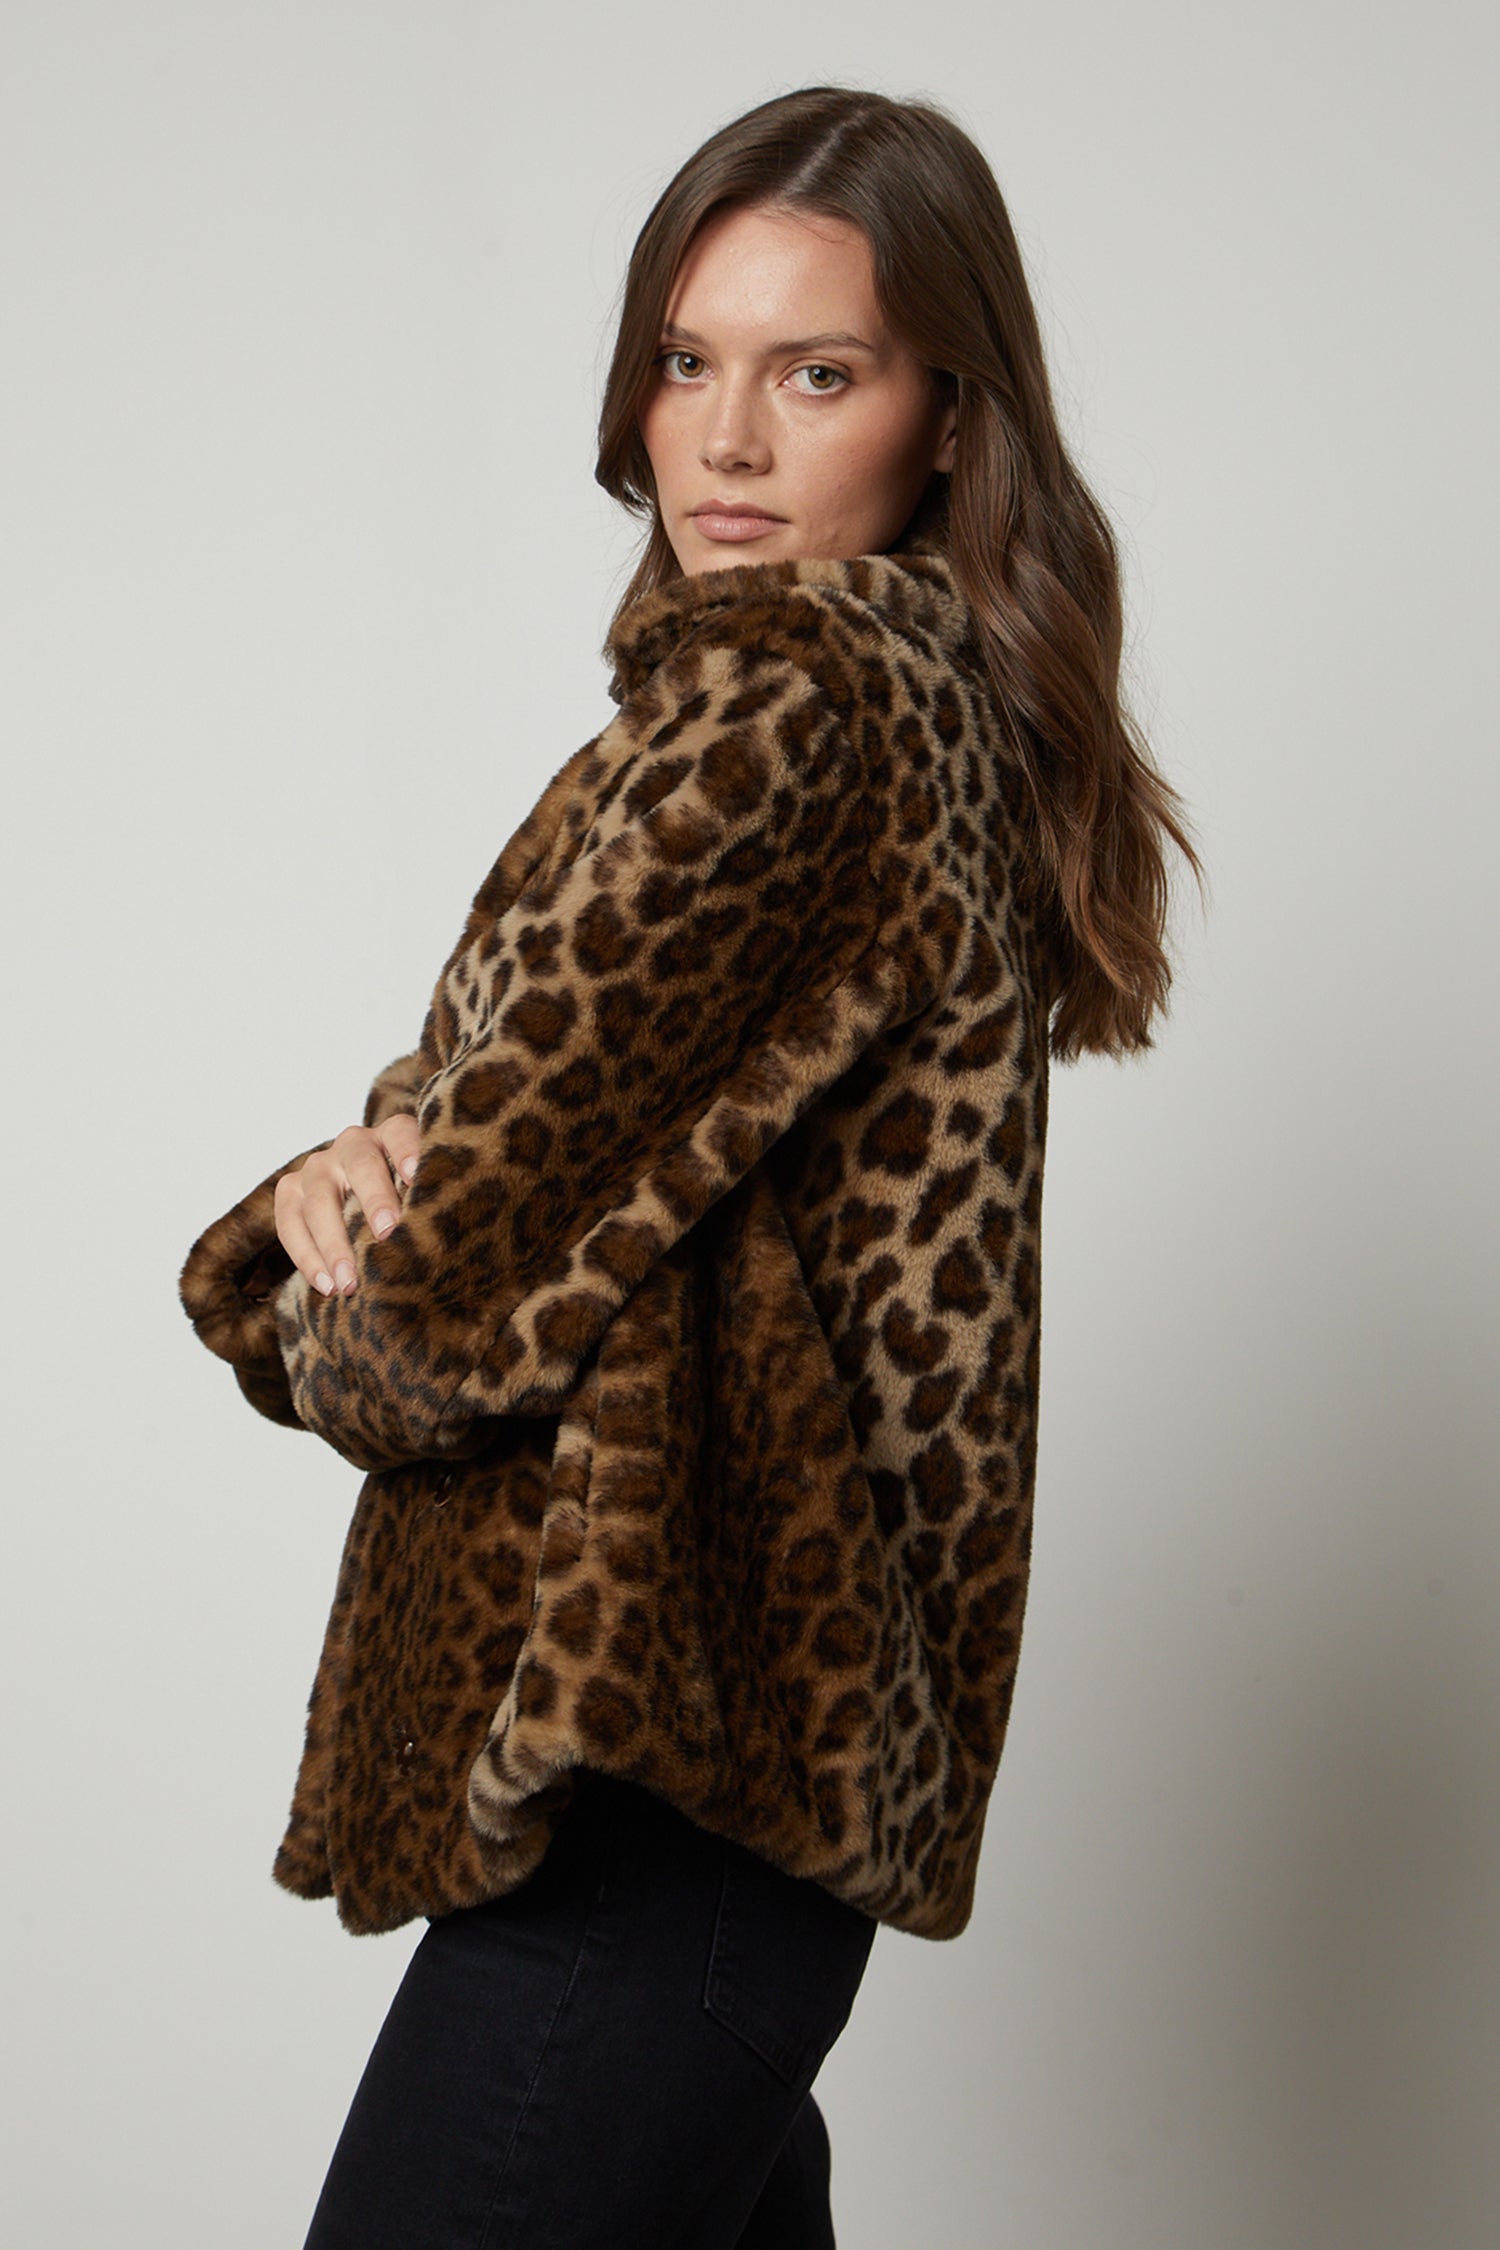 Forever 21 Faux Fur Coat Jacket Leopard Black/Brown Large L PLUSH New! $88